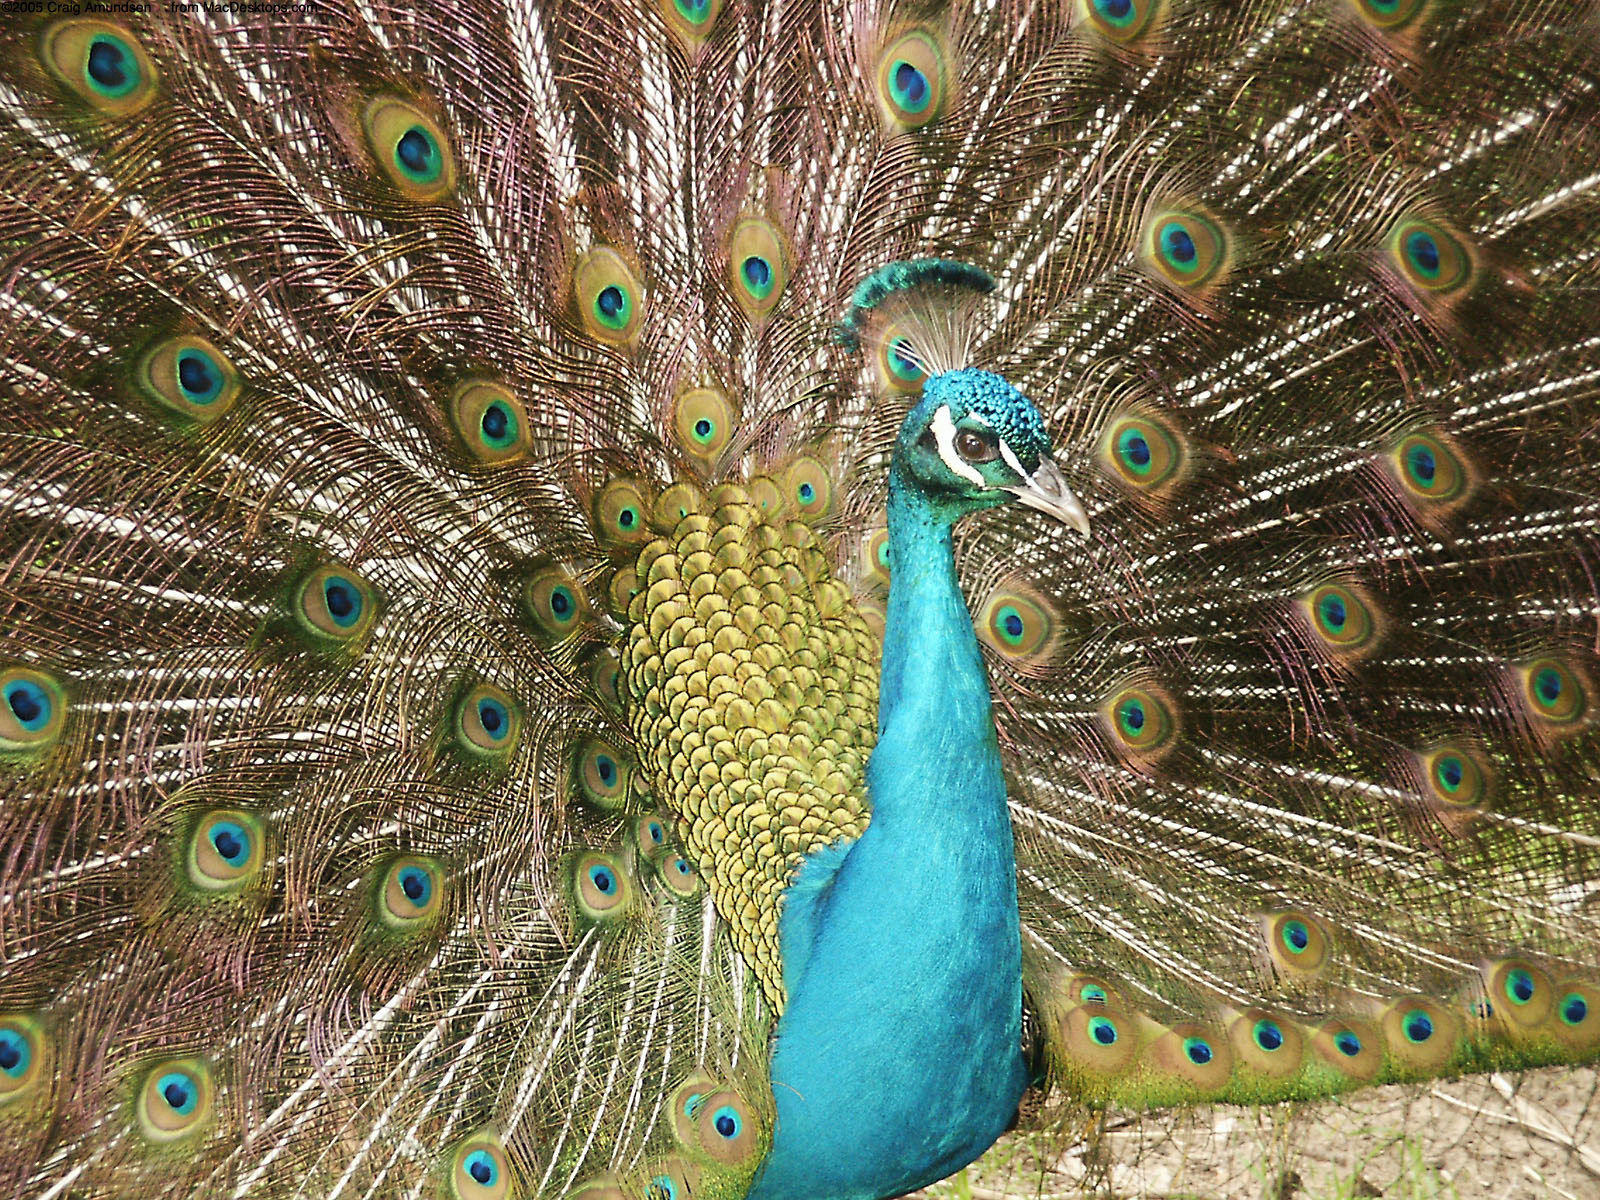 A Peacock - Wallpaper, High Definition, High Quality, Widescreen